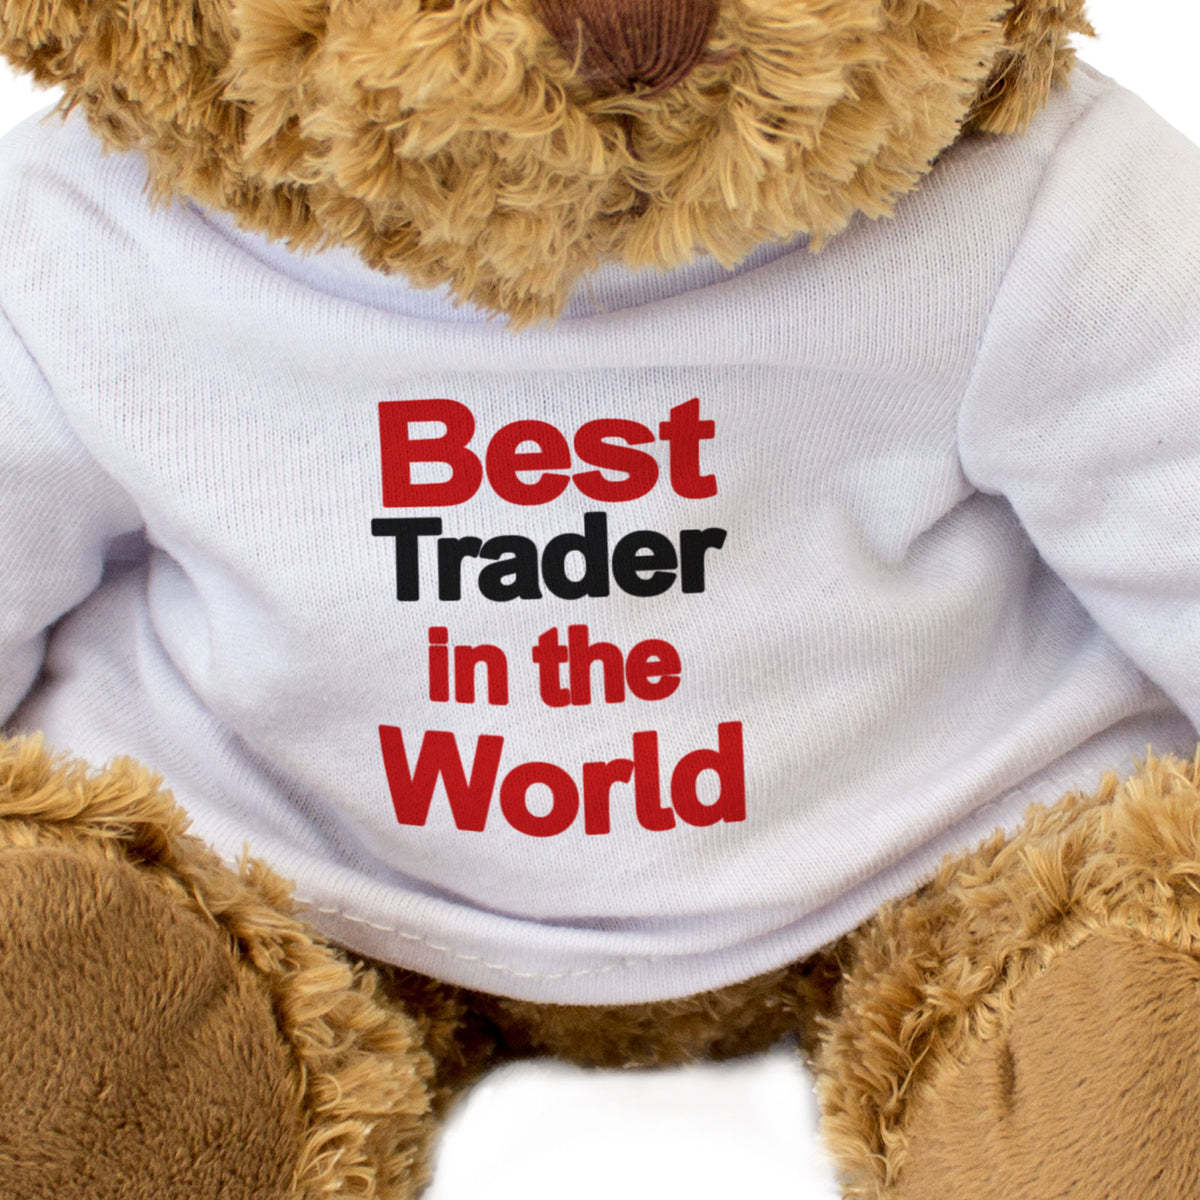 Best Trader In The World Teddy Bear